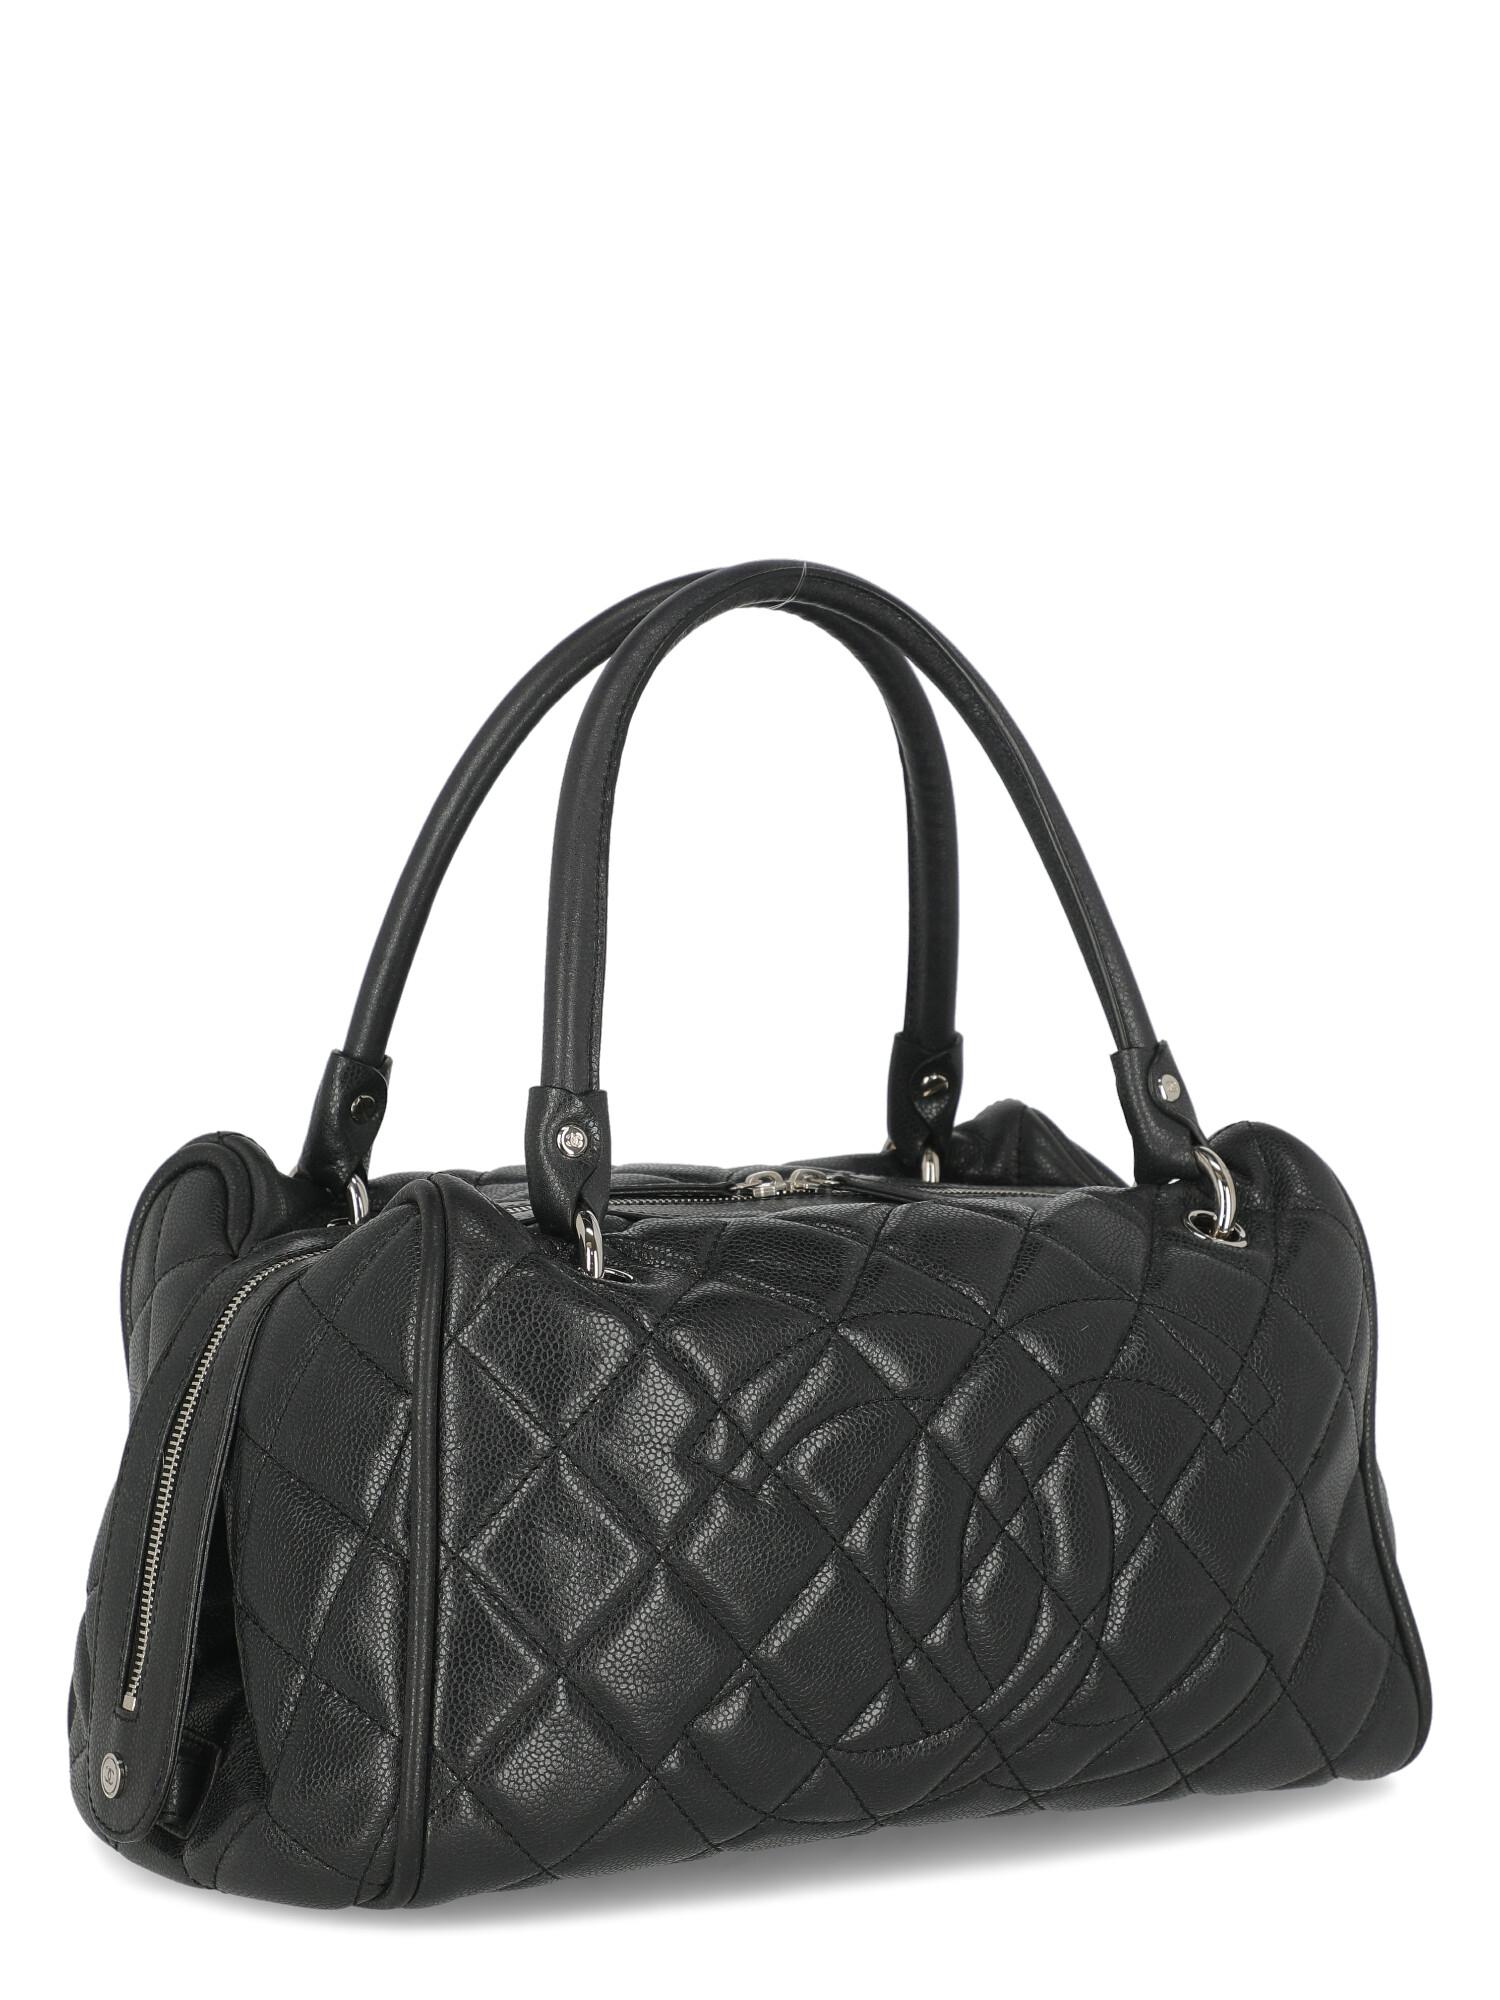 Chanel Women's Handbag Black Leather In Good Condition In Milan, IT